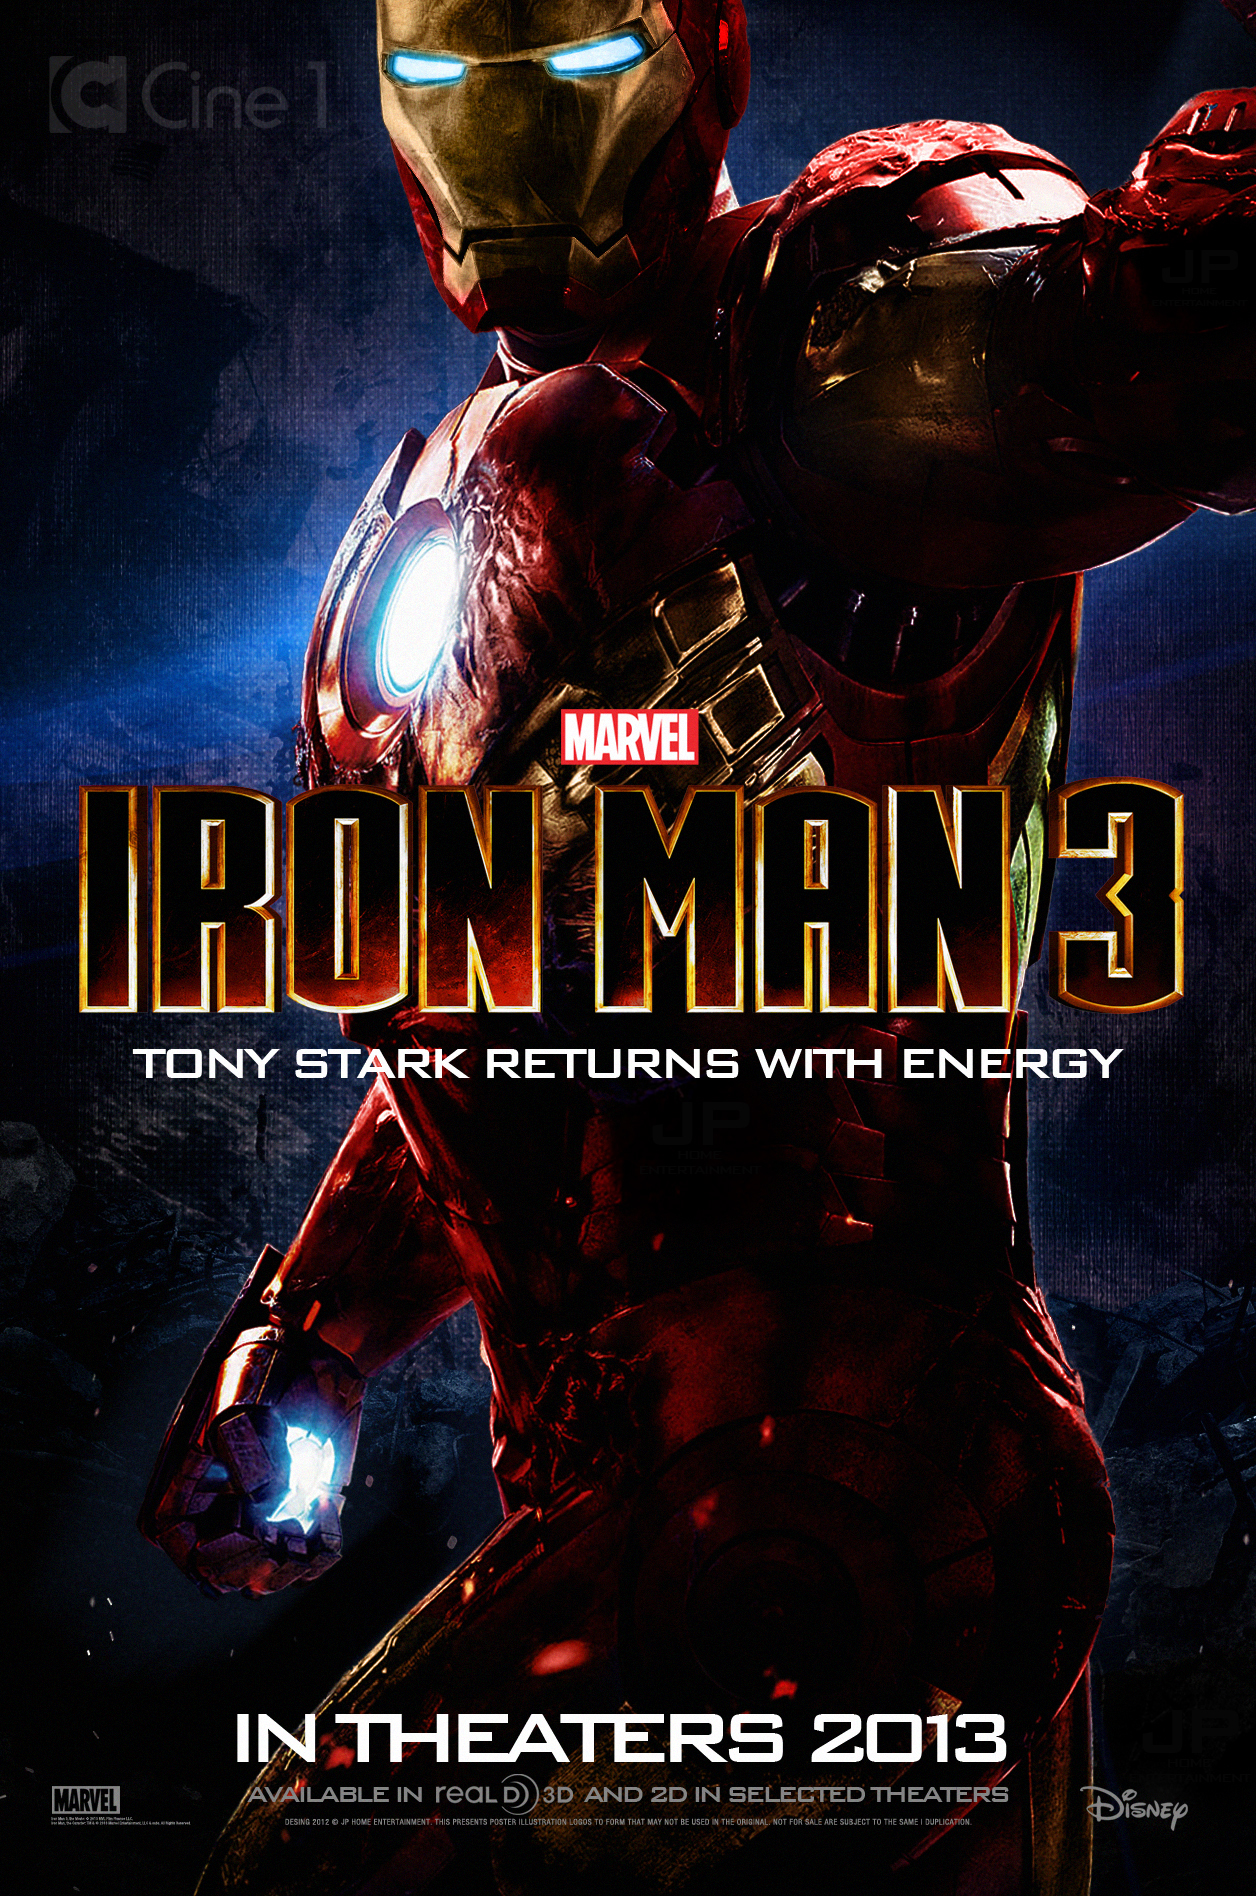 Iron Man 3 - Poster 2 by ~jphomeentertainment